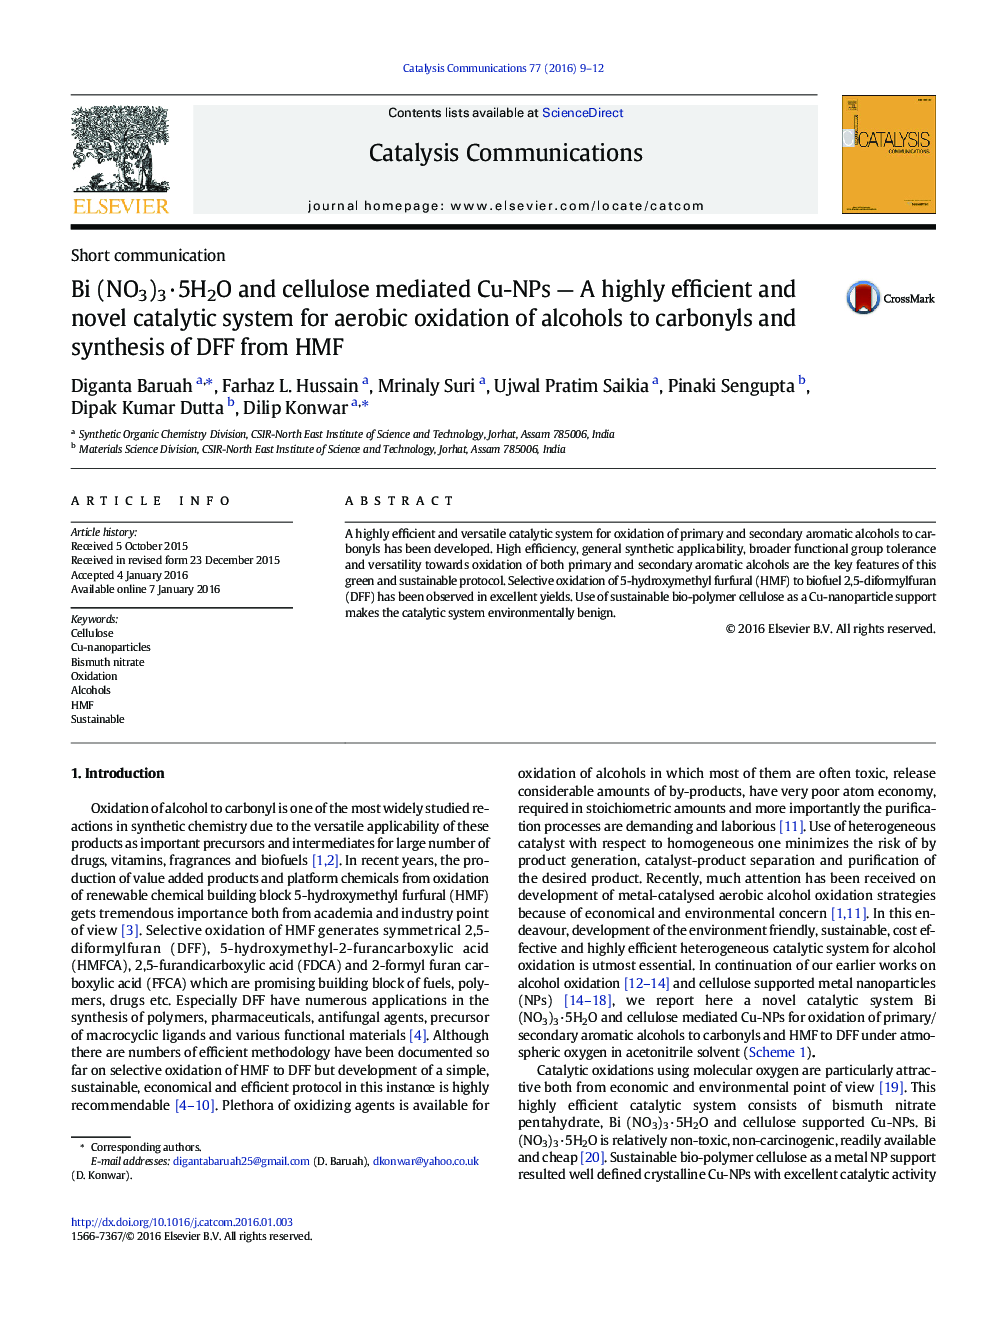 Bi (NO3) 3 · 5H2O و سلولز واسطه Cu-NPs - یک سیستم کاتالیزوری بسیار کارآمد و جدید برای اکسیداسیون هوازی از الکل ها به کربنیل ها و سنتز DFF از HMF